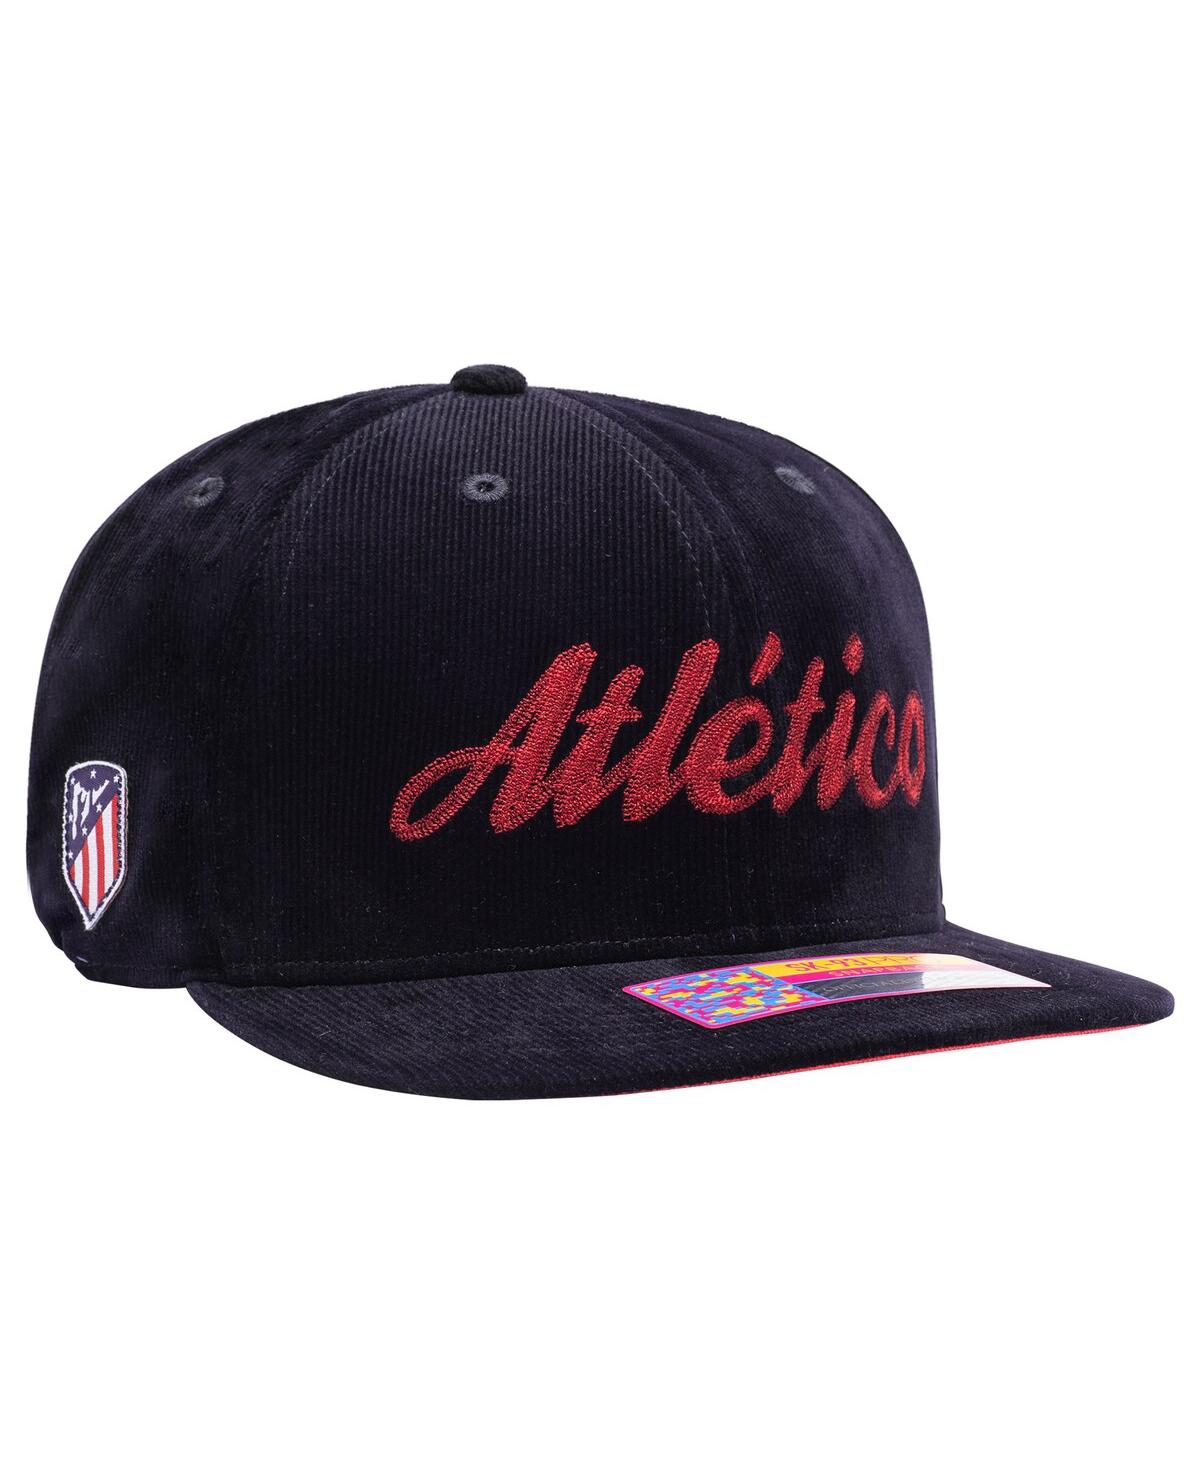 Men's Navy Atletico de Madrid Plush Snapback Hat - Navy